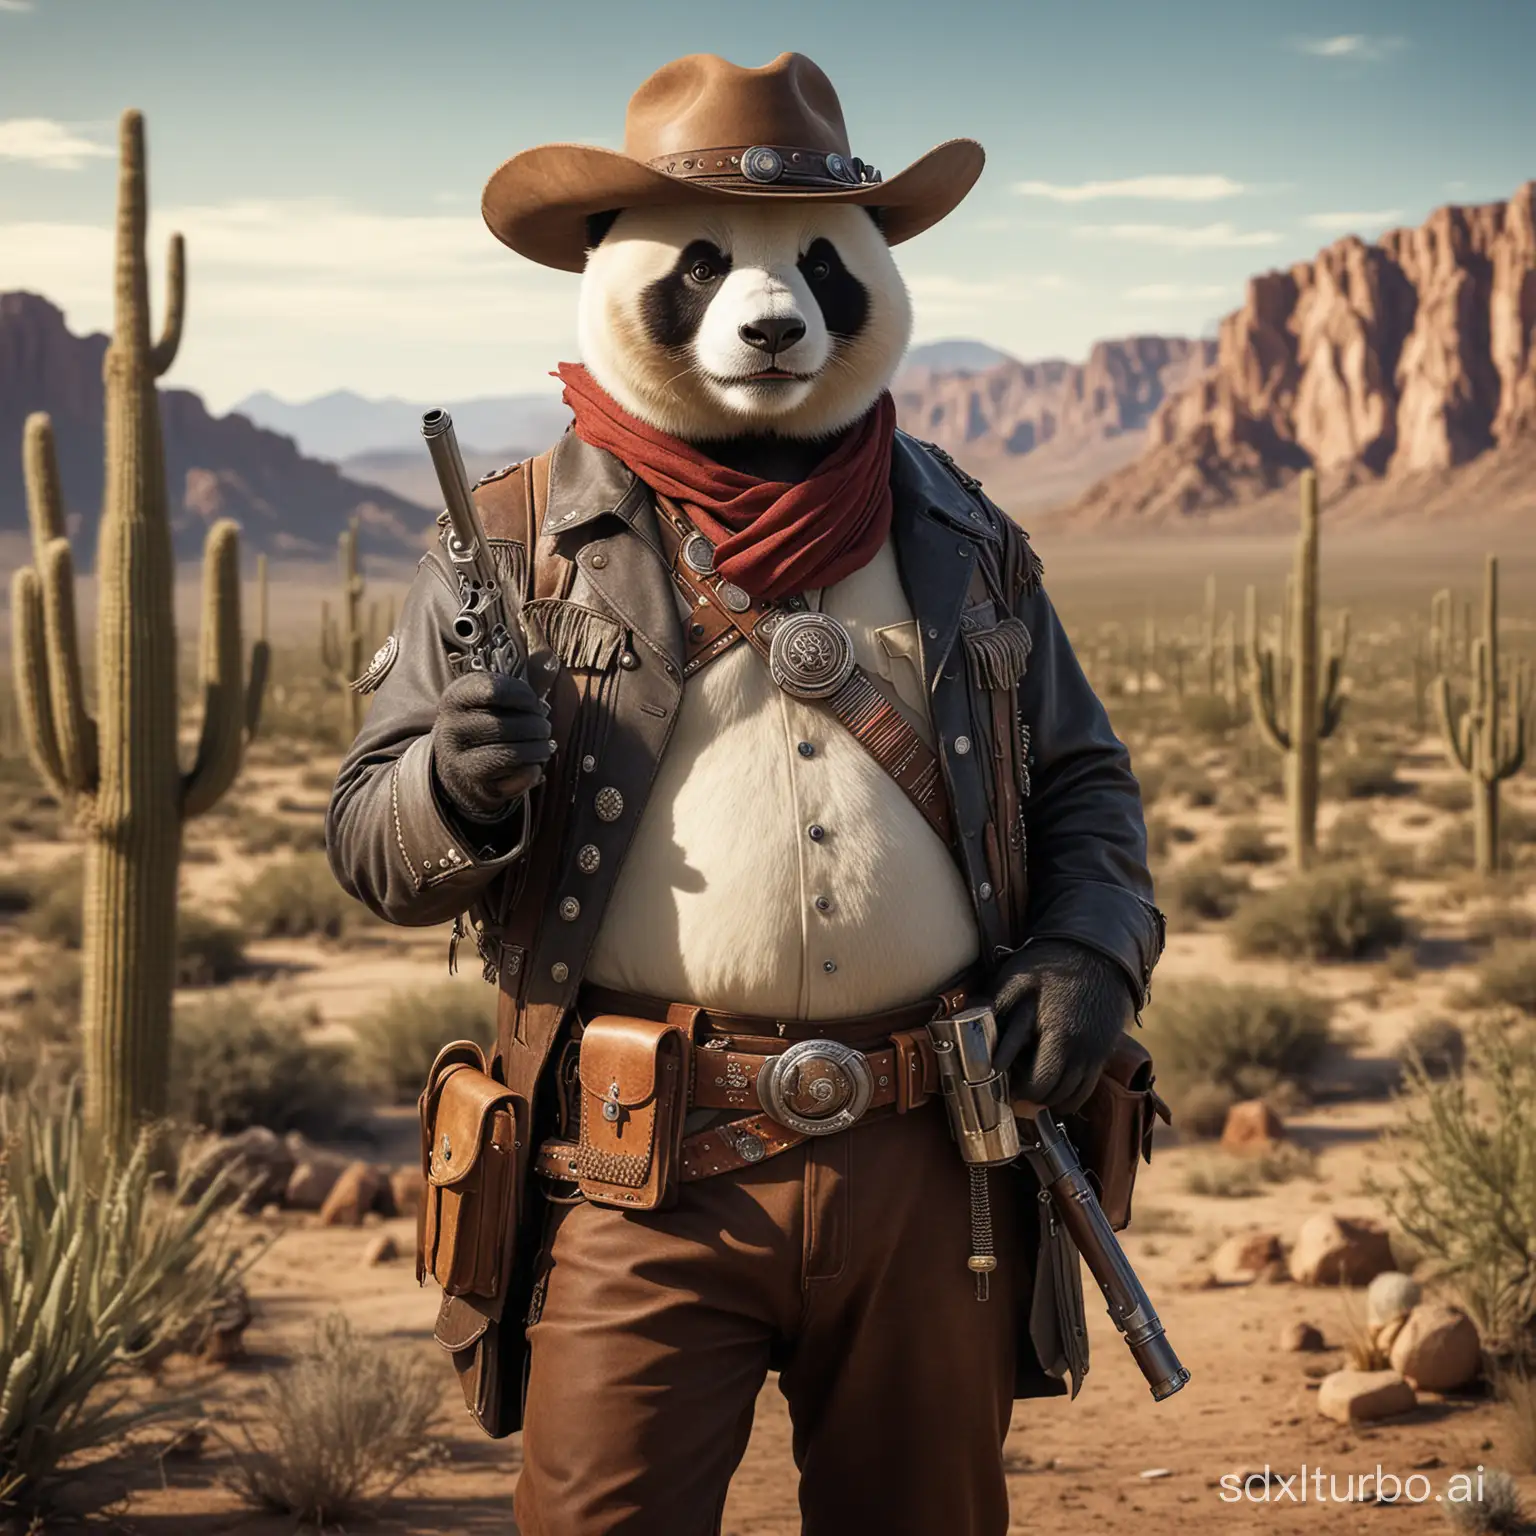 Desert-Cowboy-Panda-with-Revolvers-and-Cigar